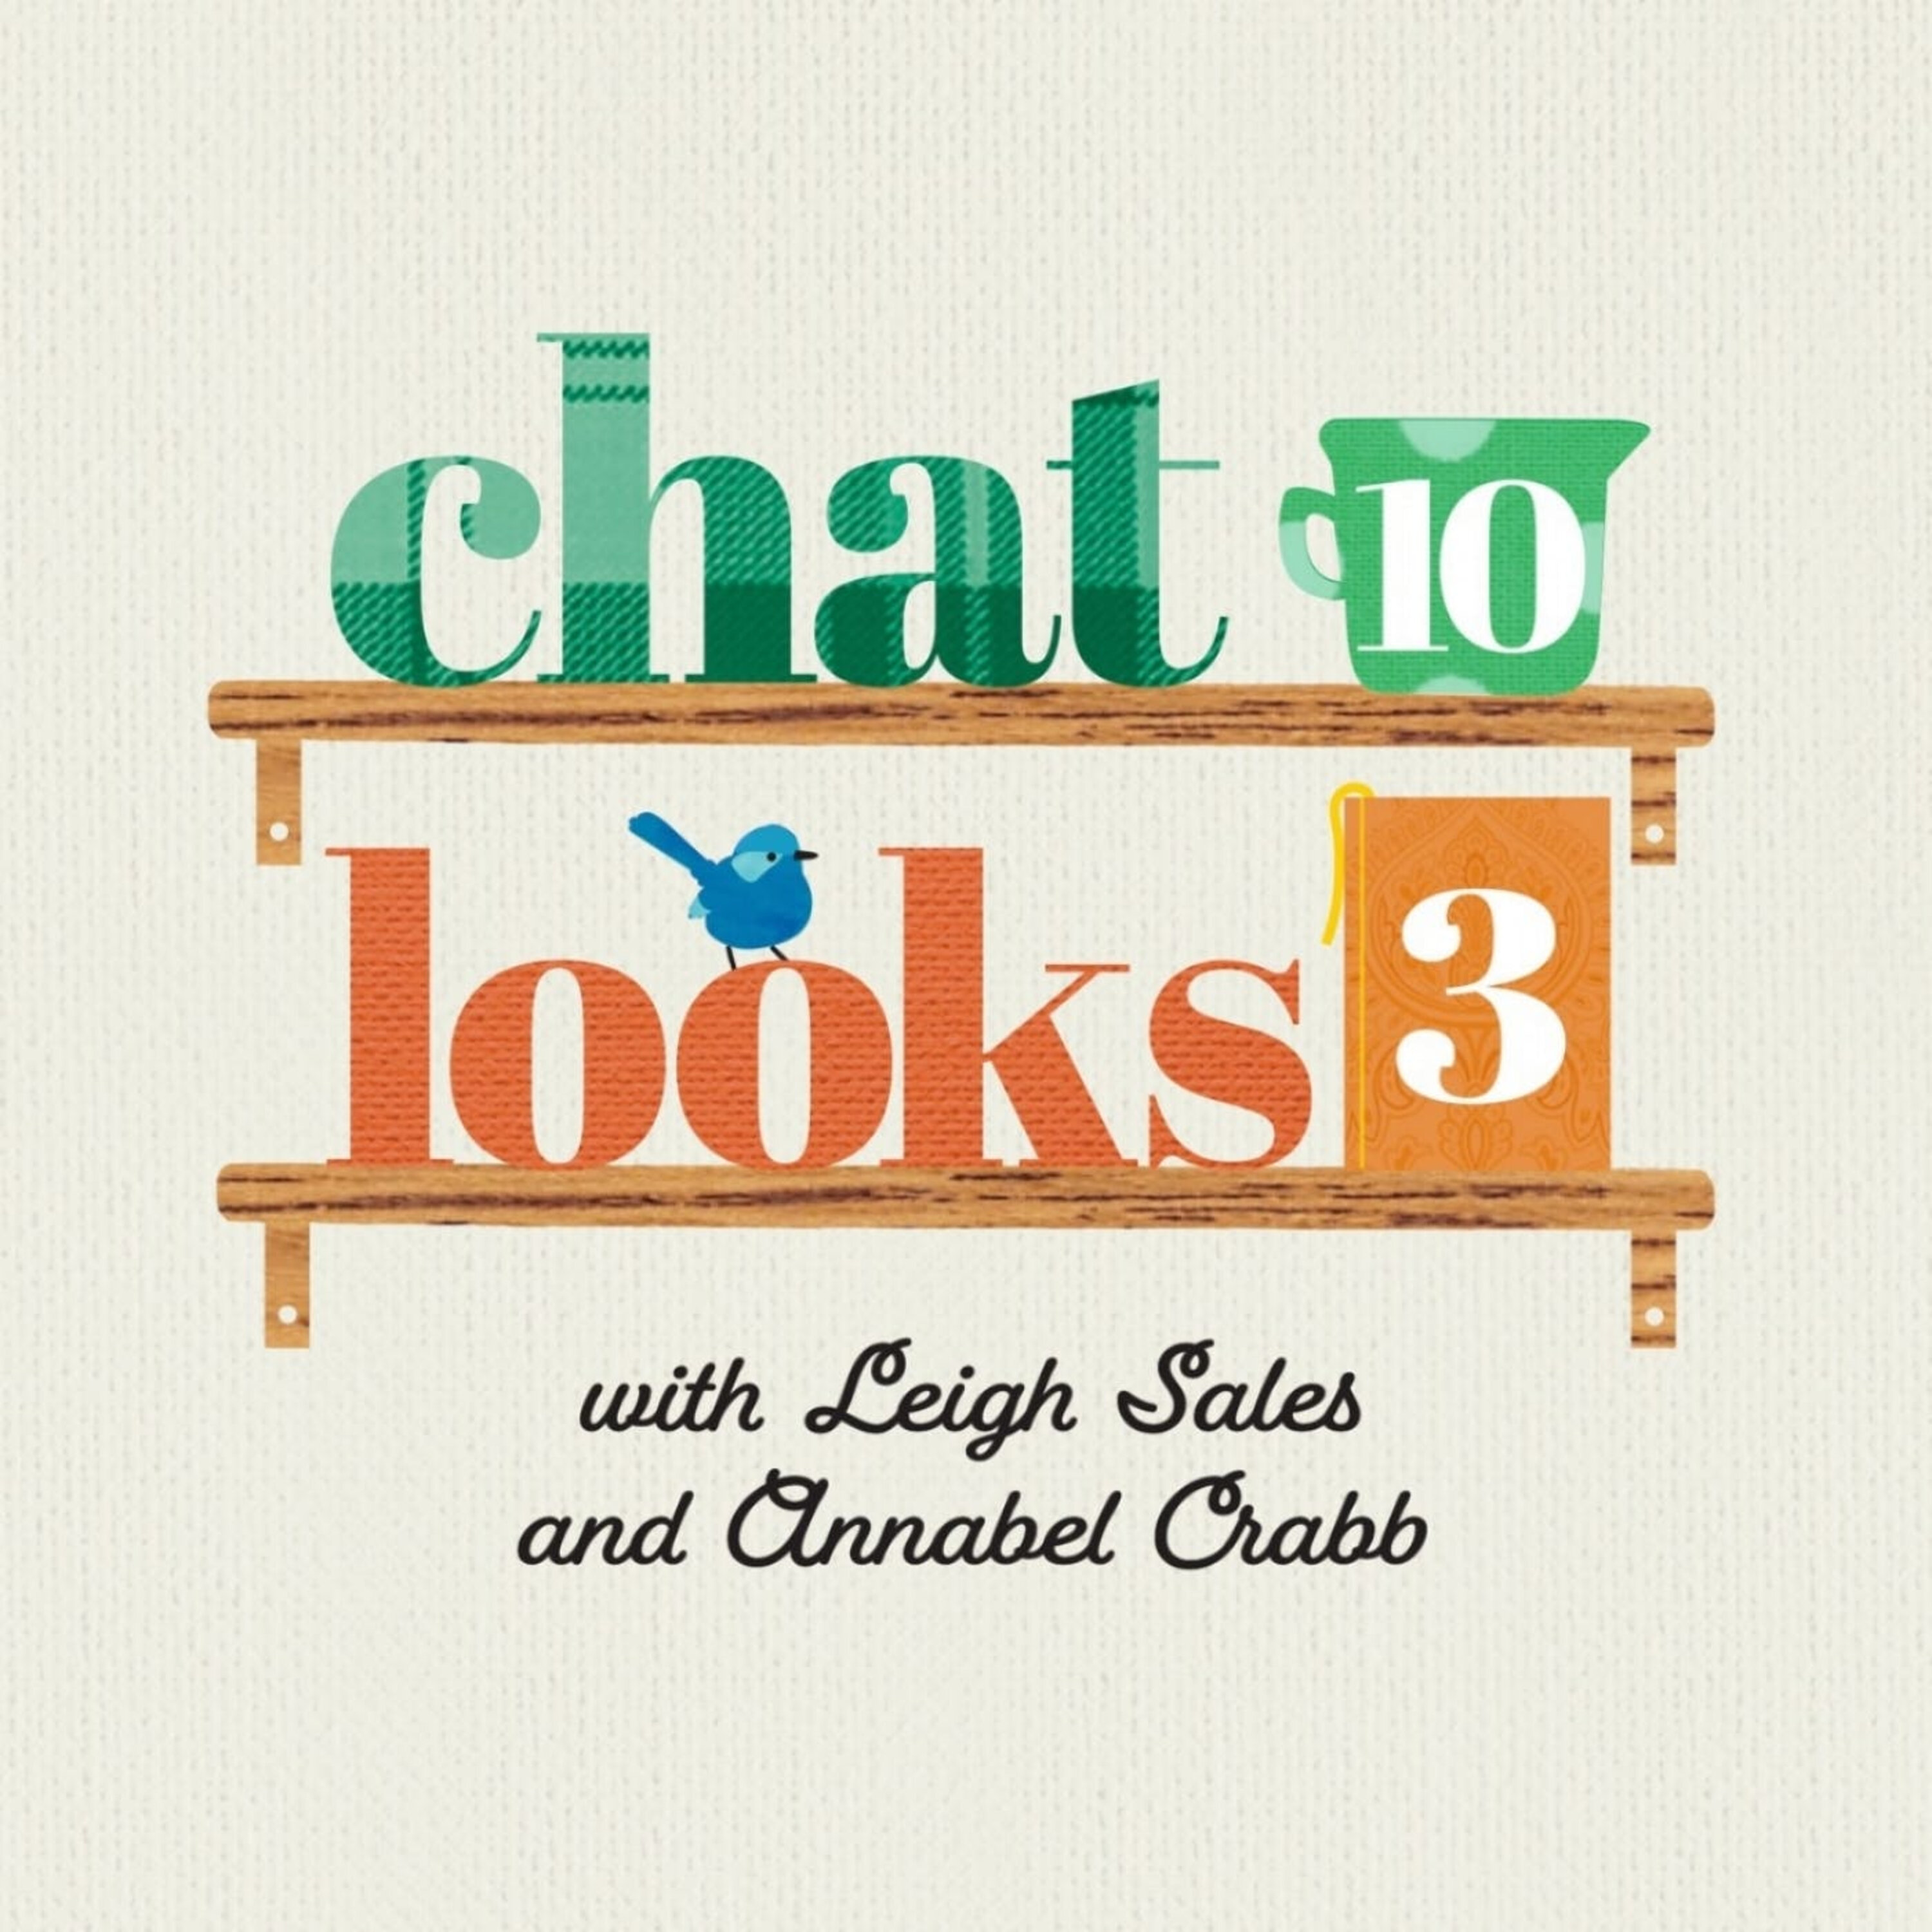 Chat 10 Looks 3 | LiSTNR